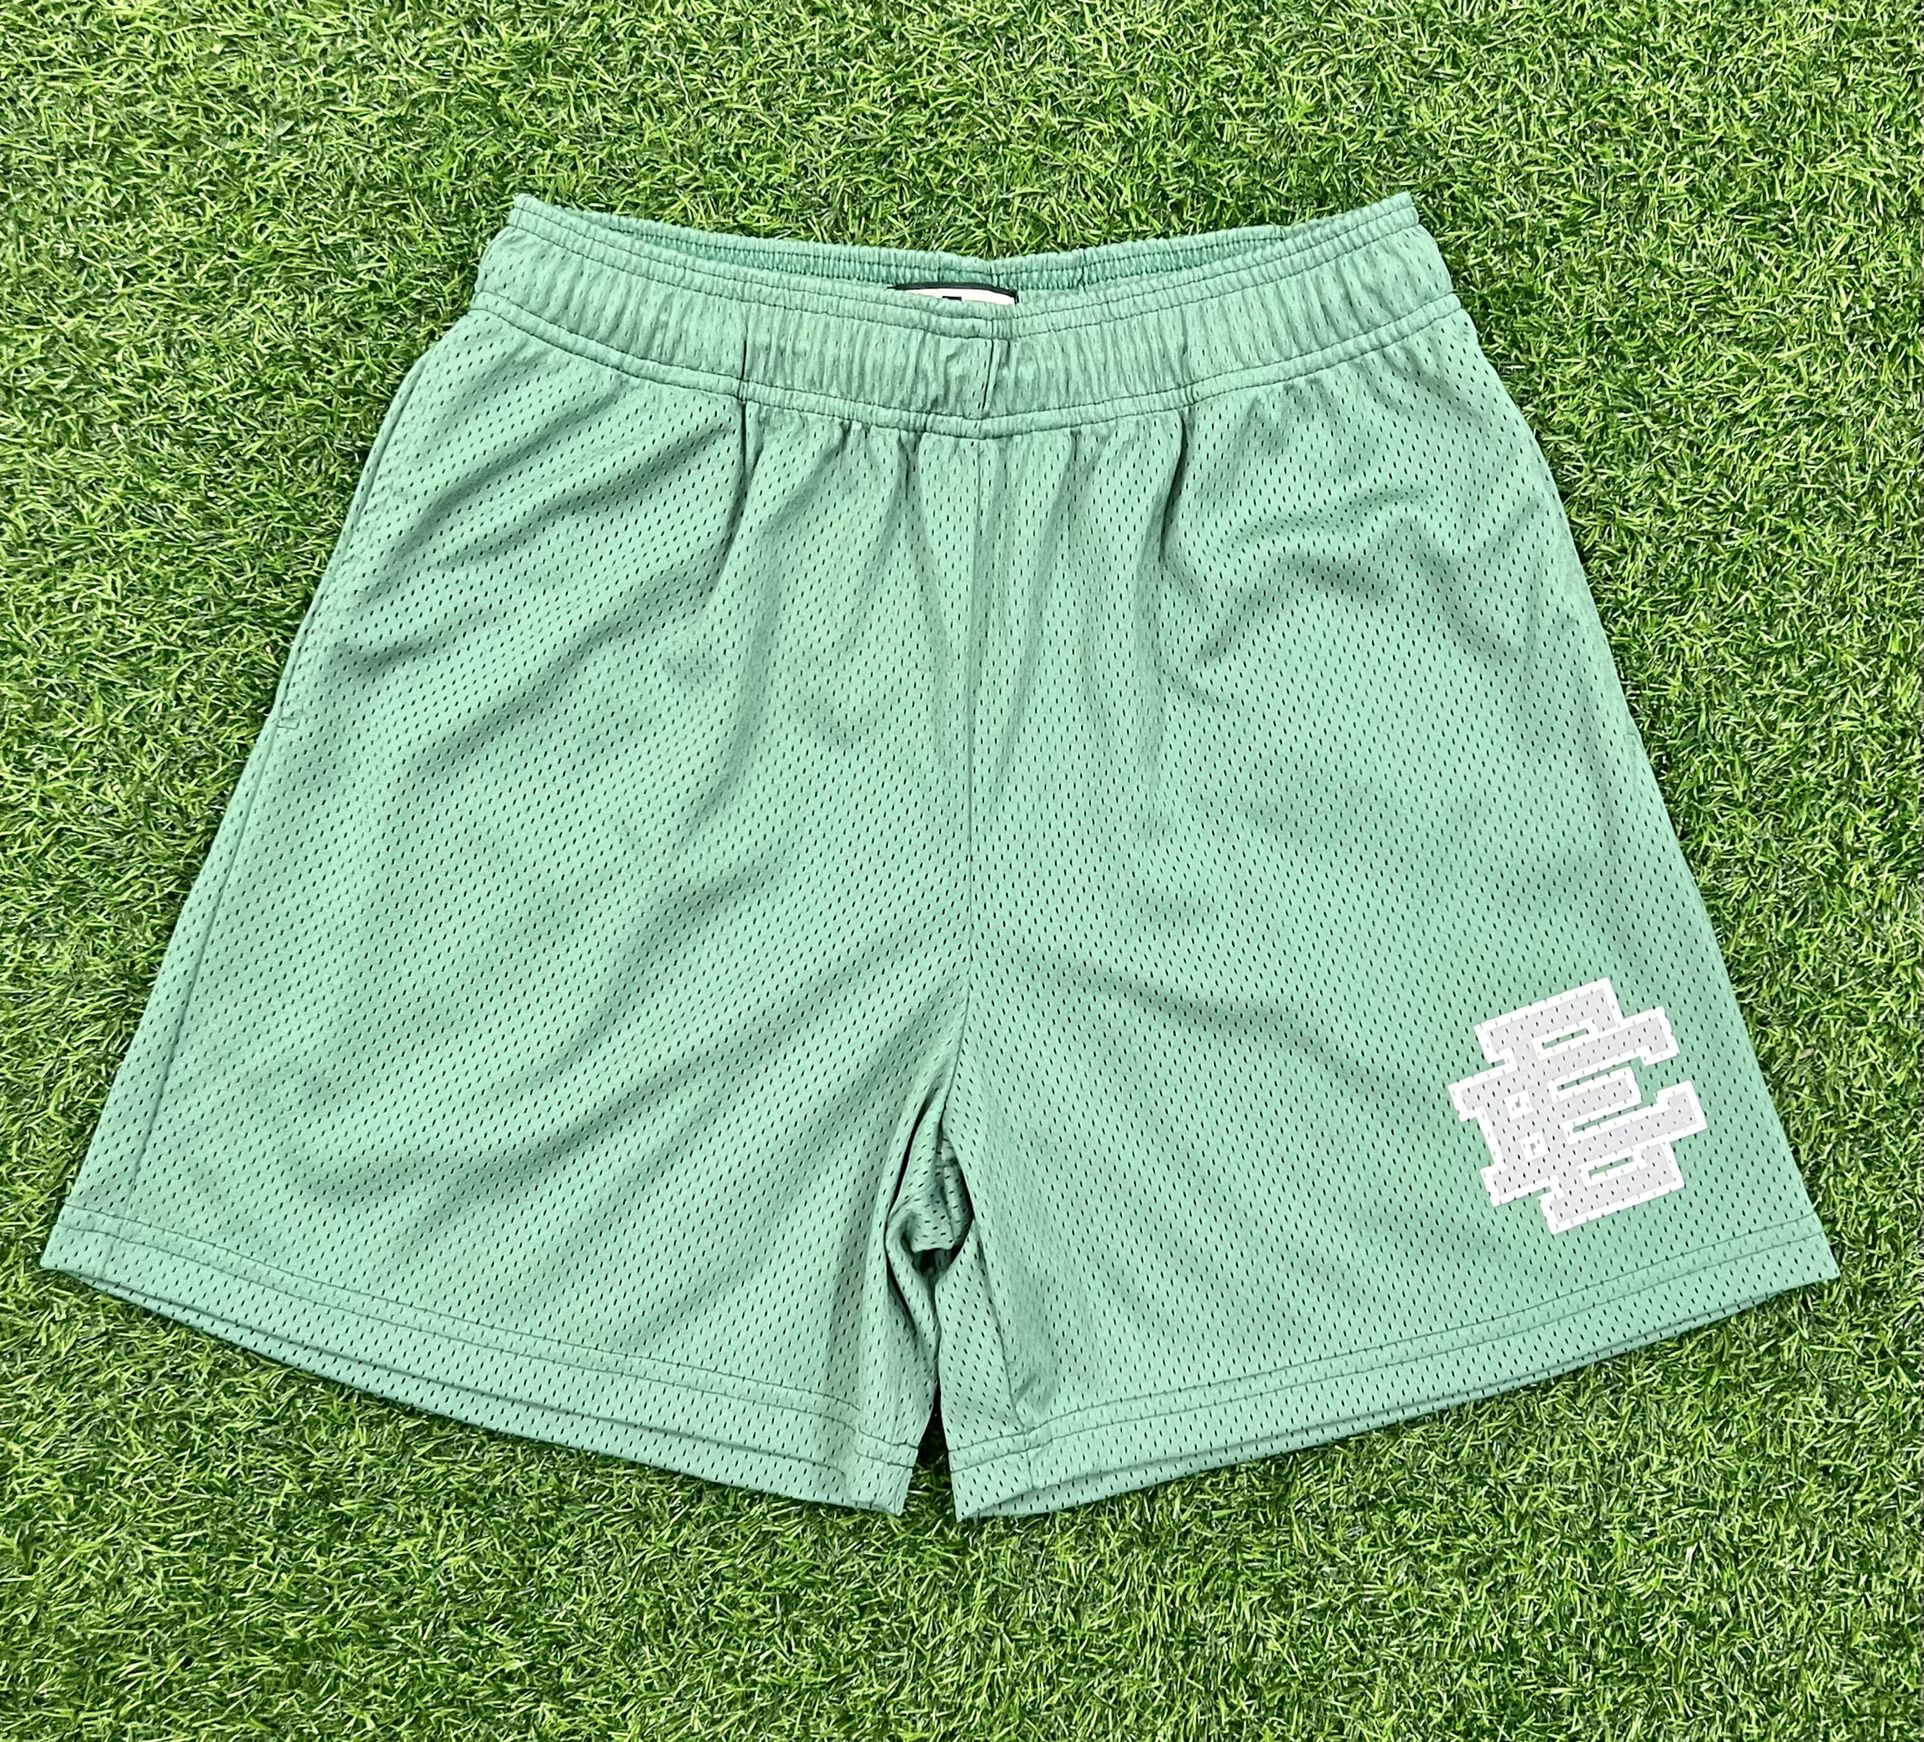 Eric Emanuel Green Basic Shorts size L